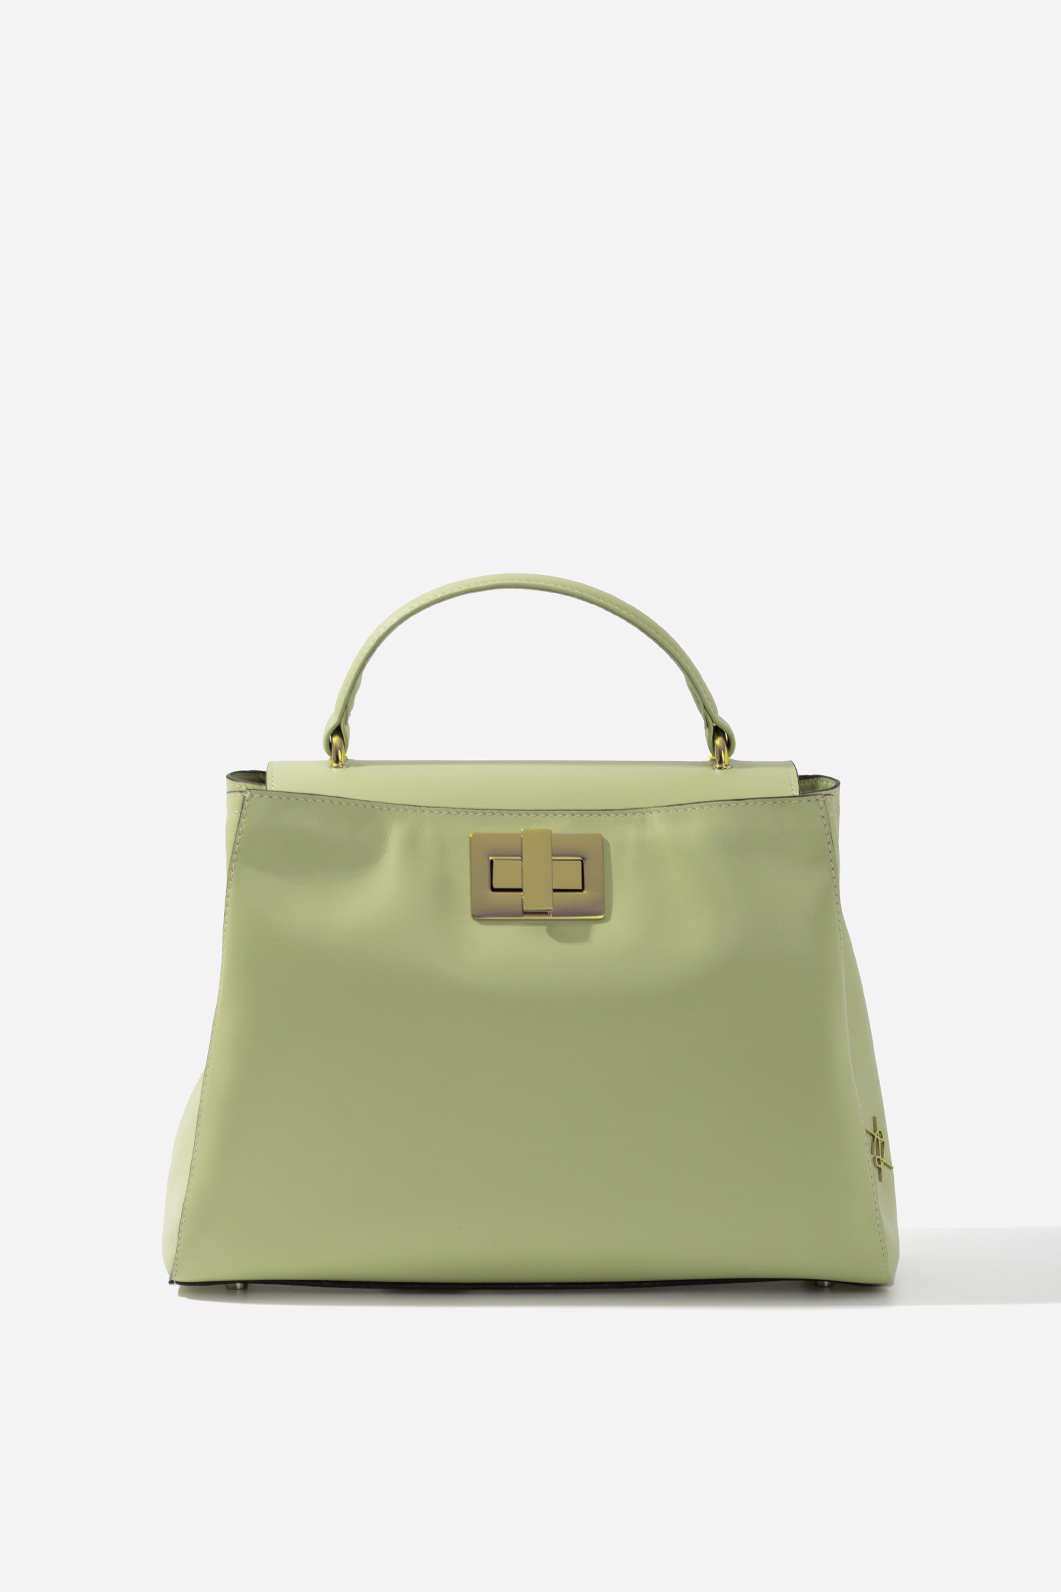 ERNA SOFT light green bag /gold/